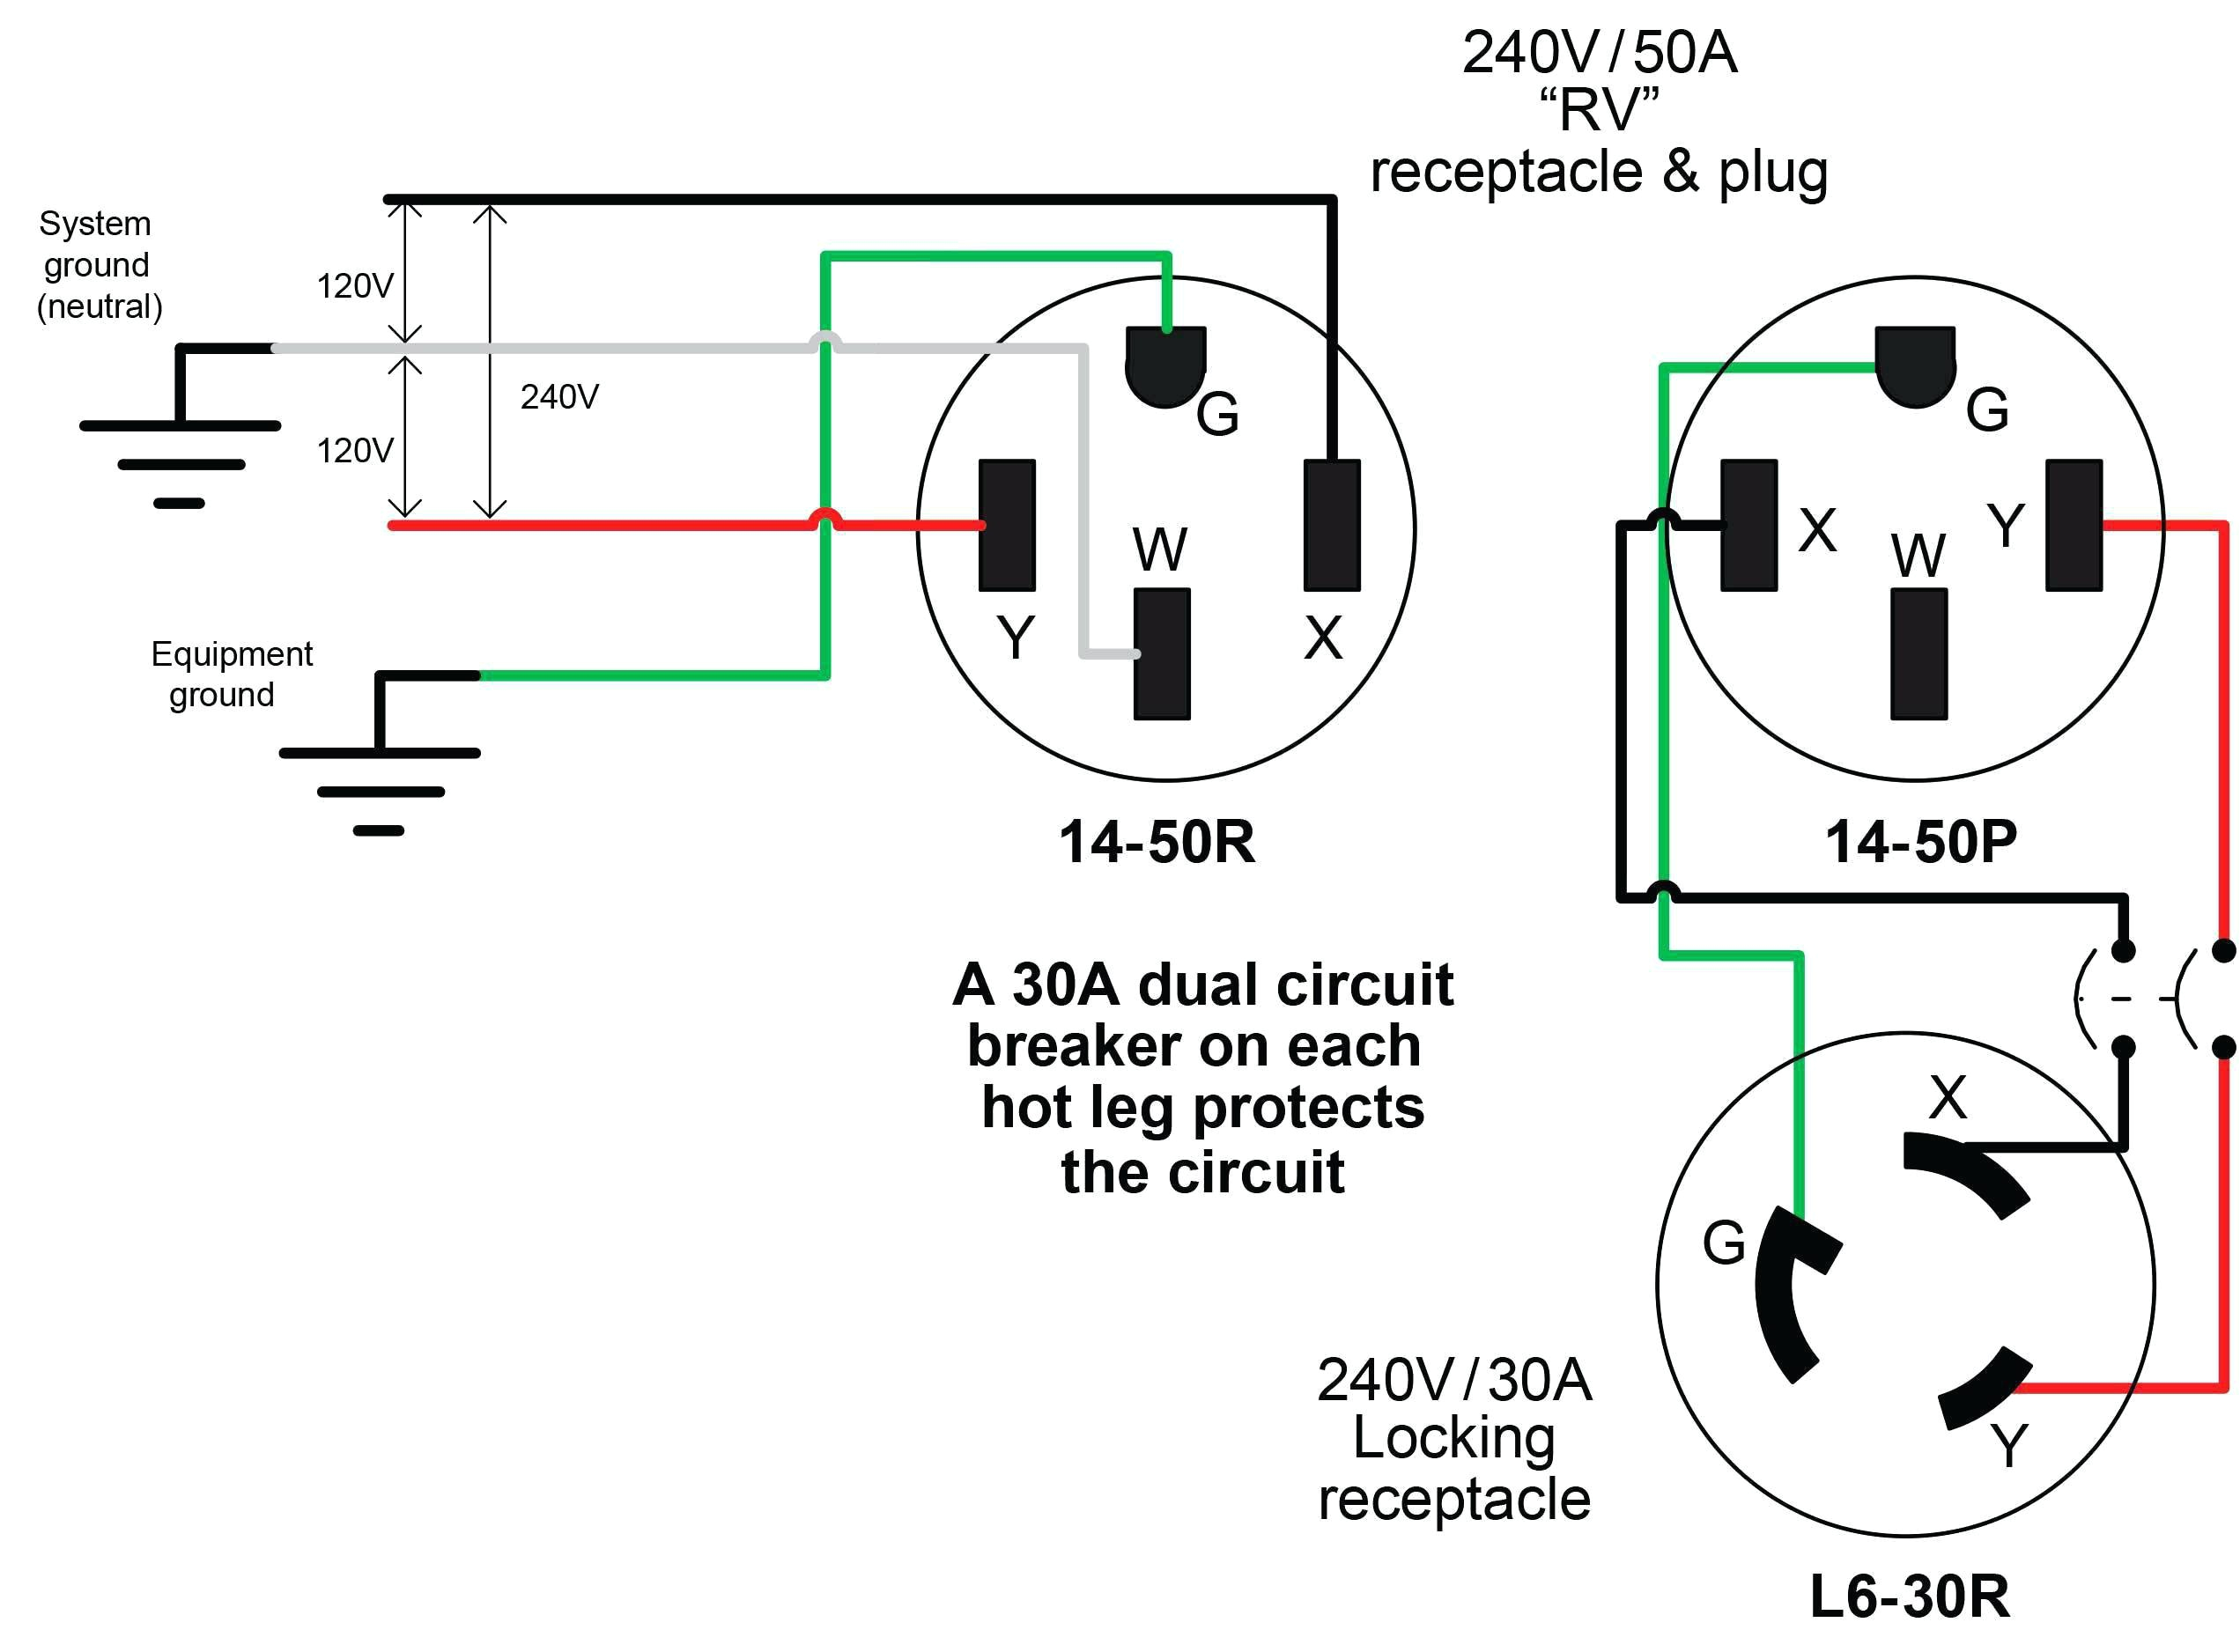 50 amp schematic wiring diagram wiring diagram datasourcewiring 50 amp appliance schematic wiring diagram toolbox 50